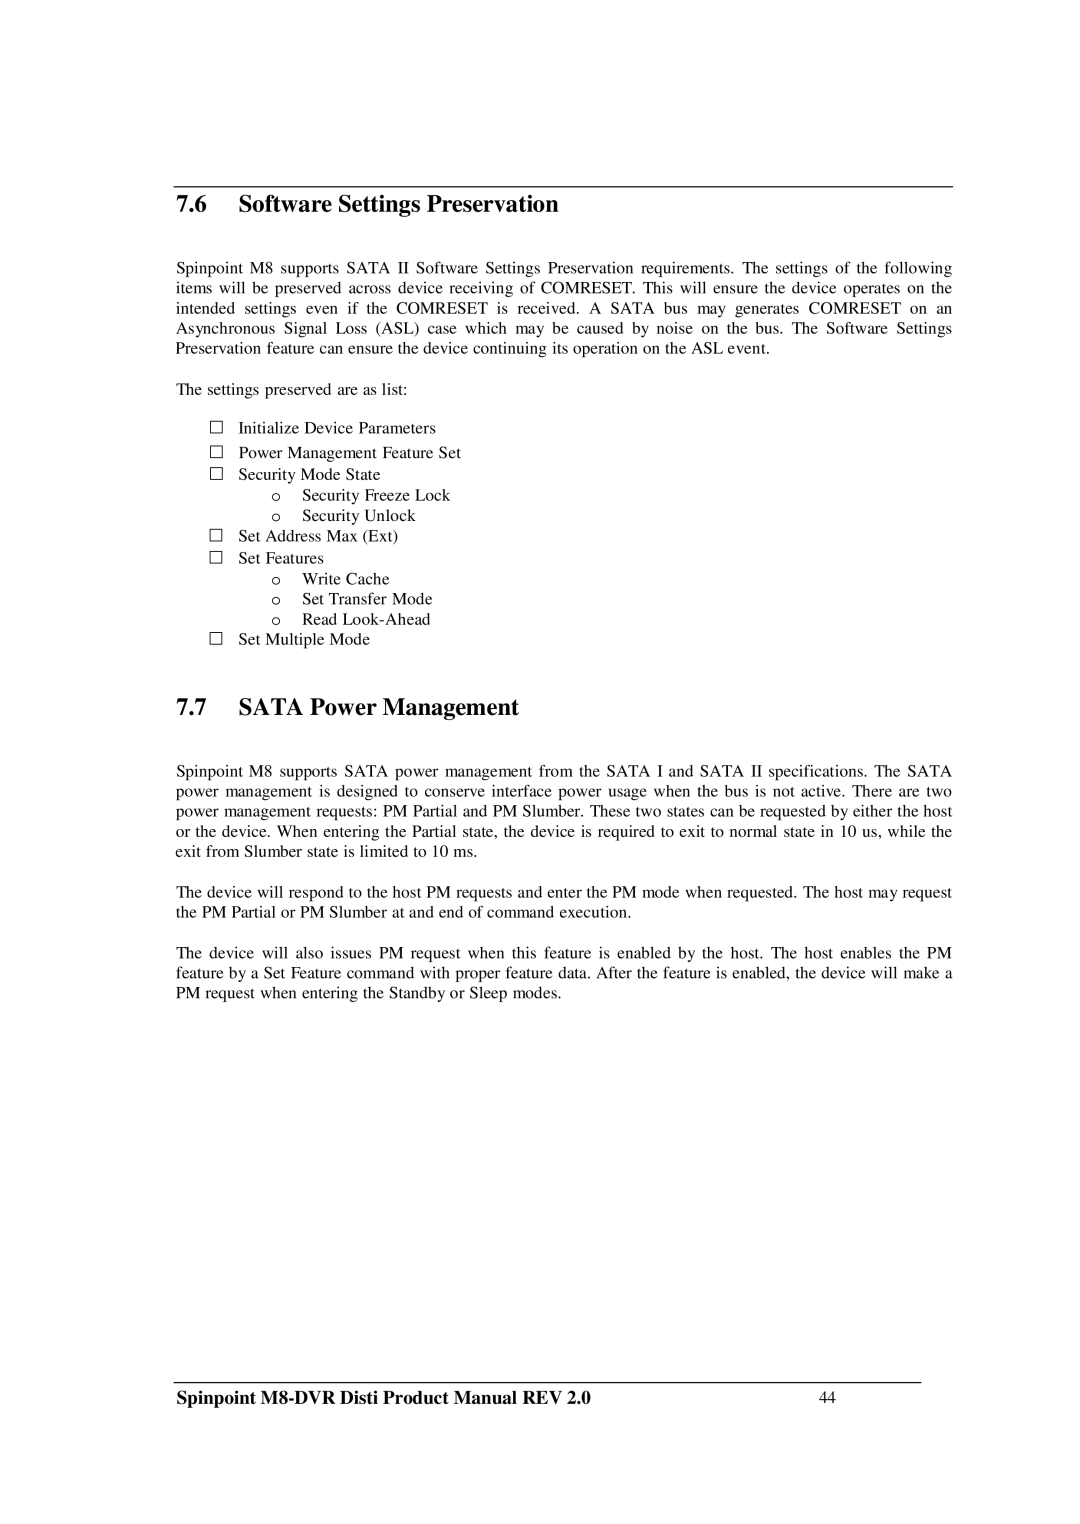 Samsung M8-DVR manual Software Settings Preservation, Sata Power Management 